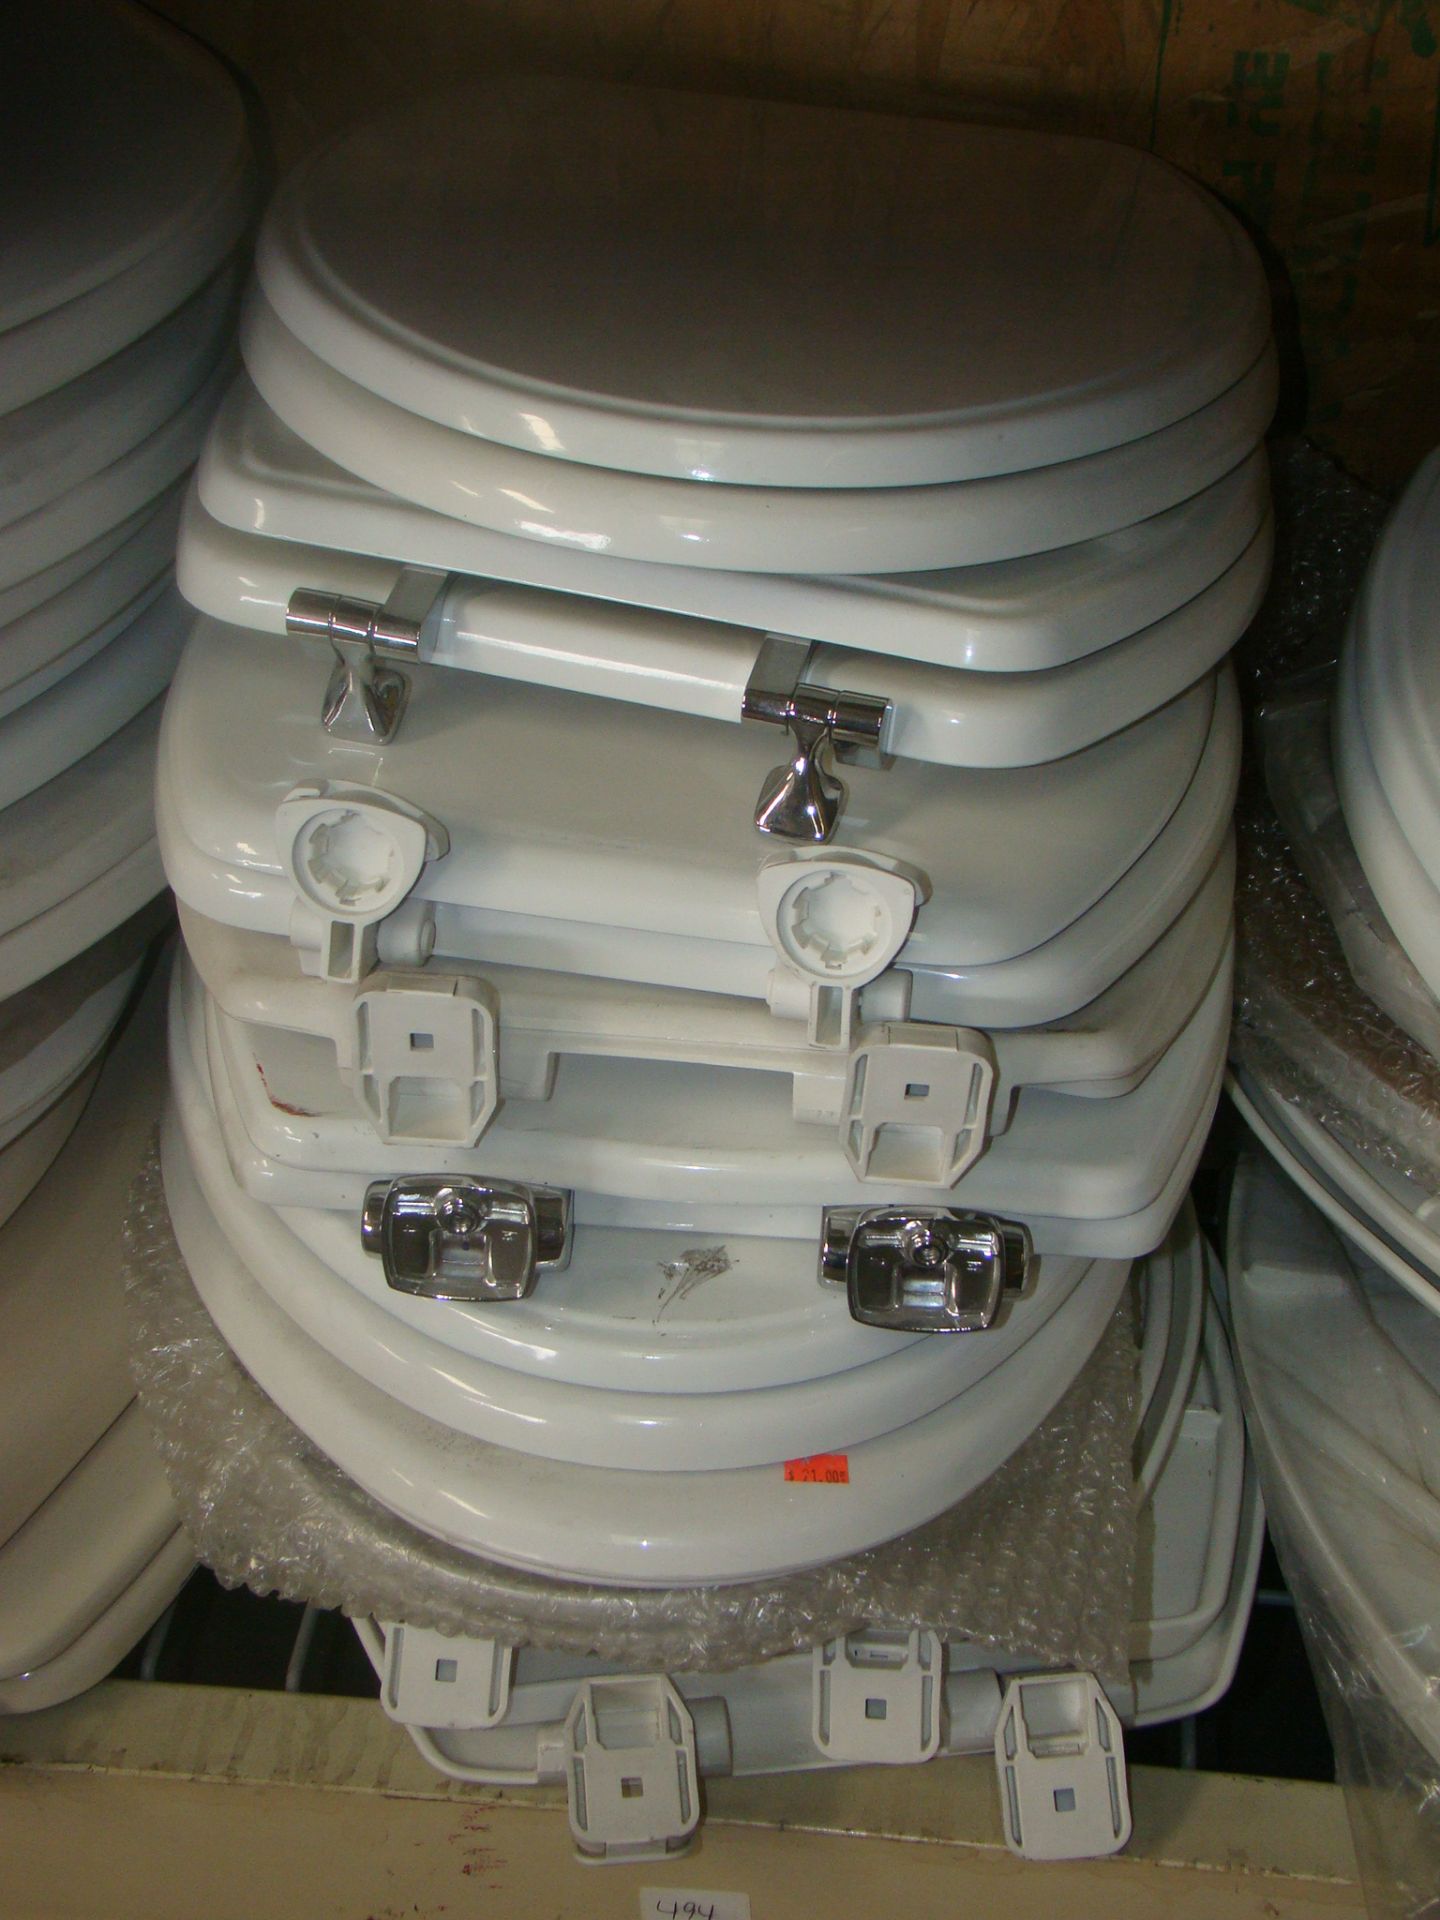 Stack of toilet lids